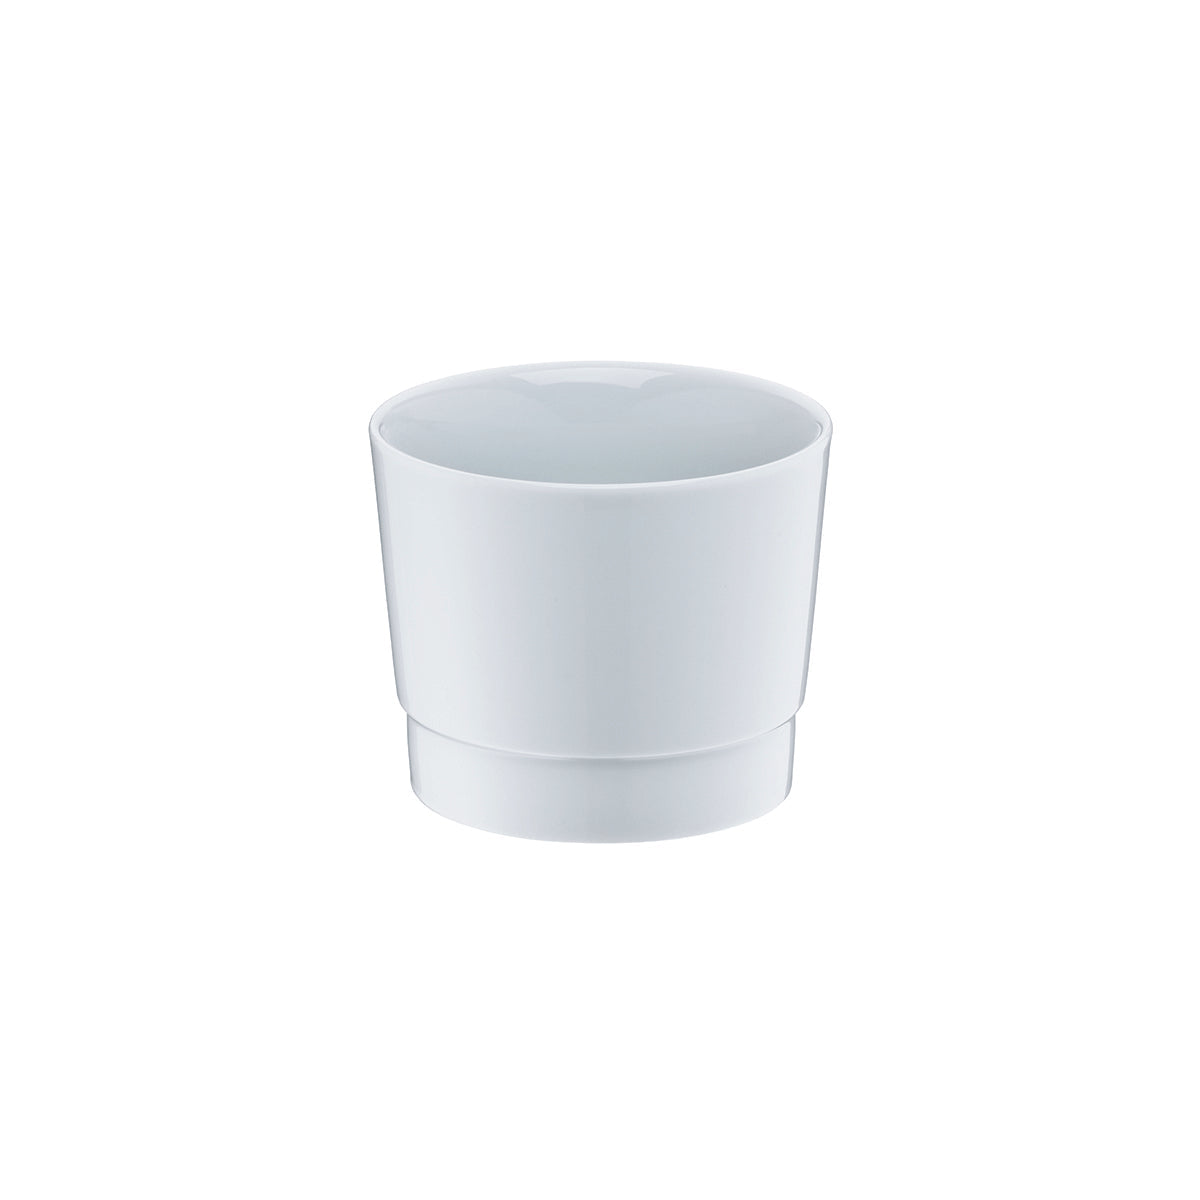 55.0112.9805 WMF CultureCup Porcelain Cup Medium Low 250ml Tomkin Australia Hospitality Supplies